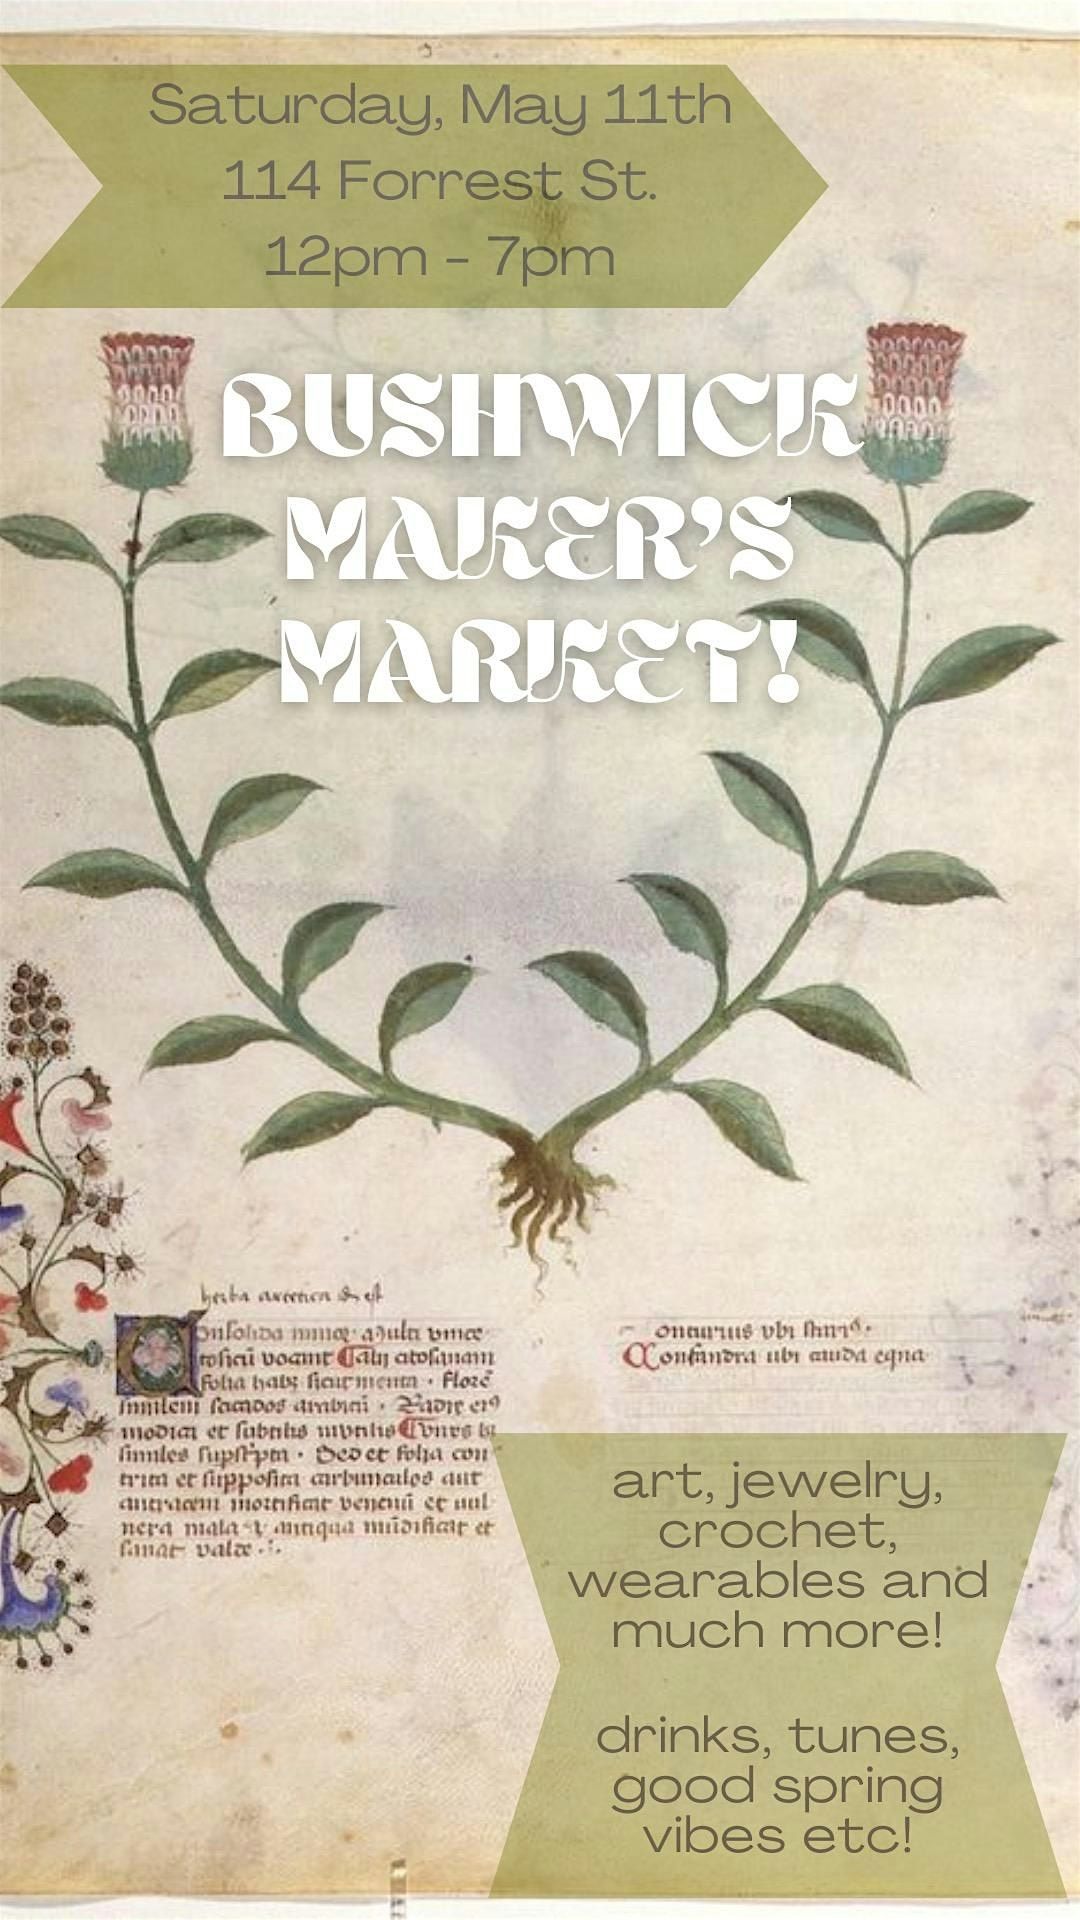 Bushwick Maker's Market Spring Edition